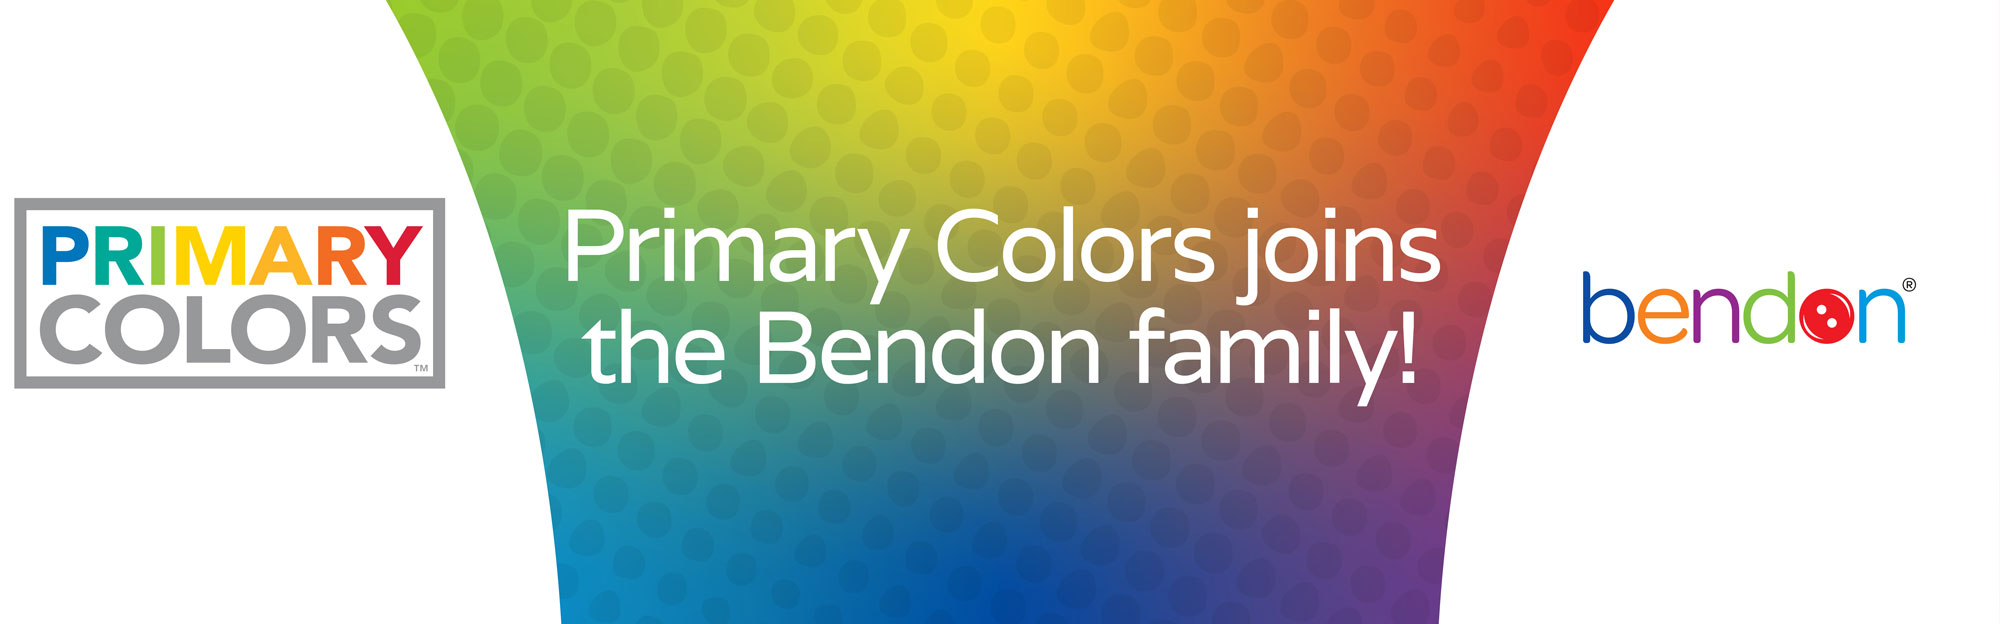 Bendon Primary Colors Announcement